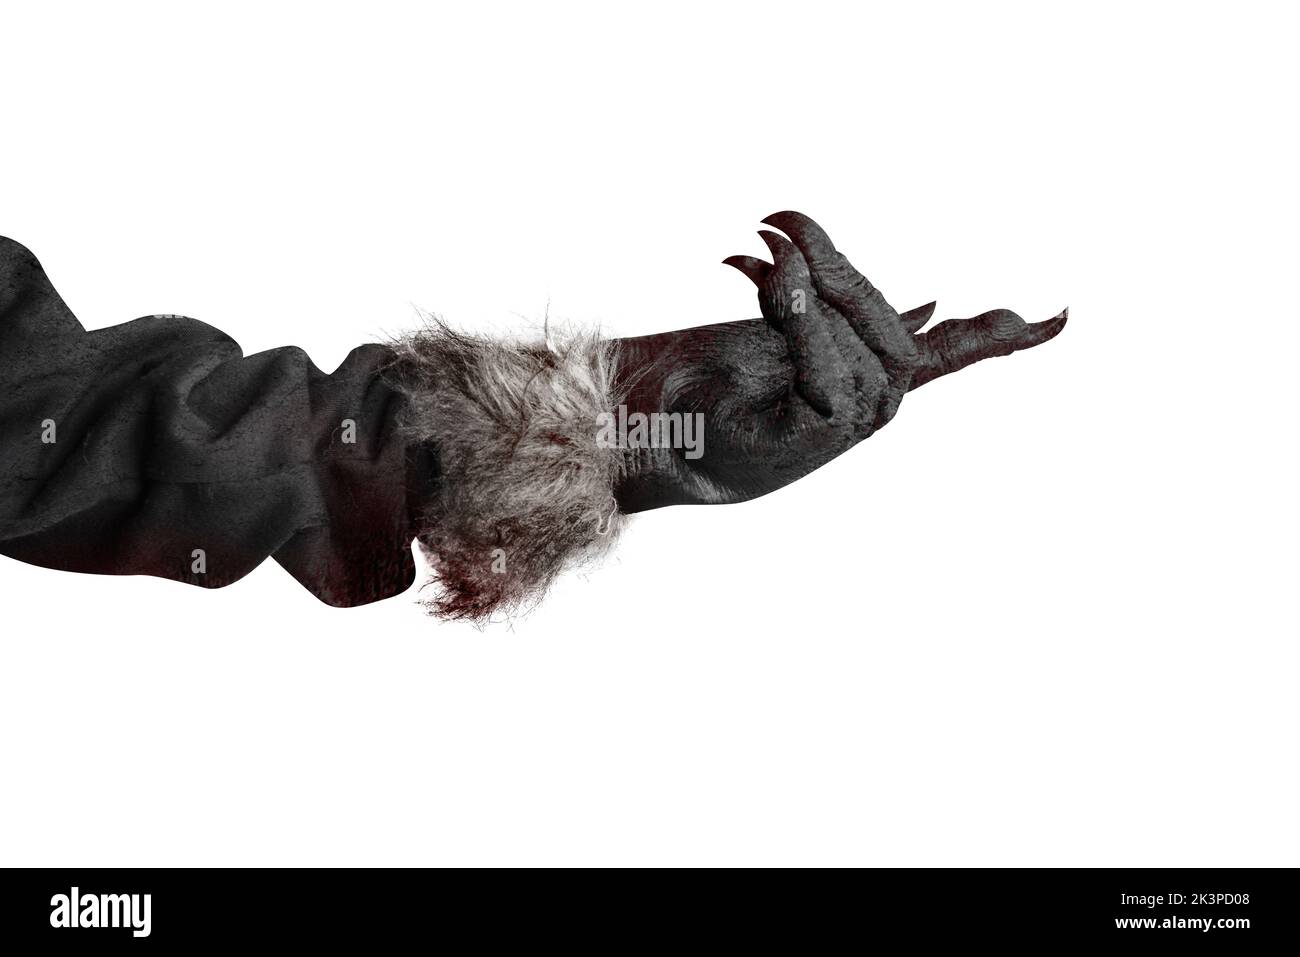 Werewolf hand isolated over white background Stock Photo